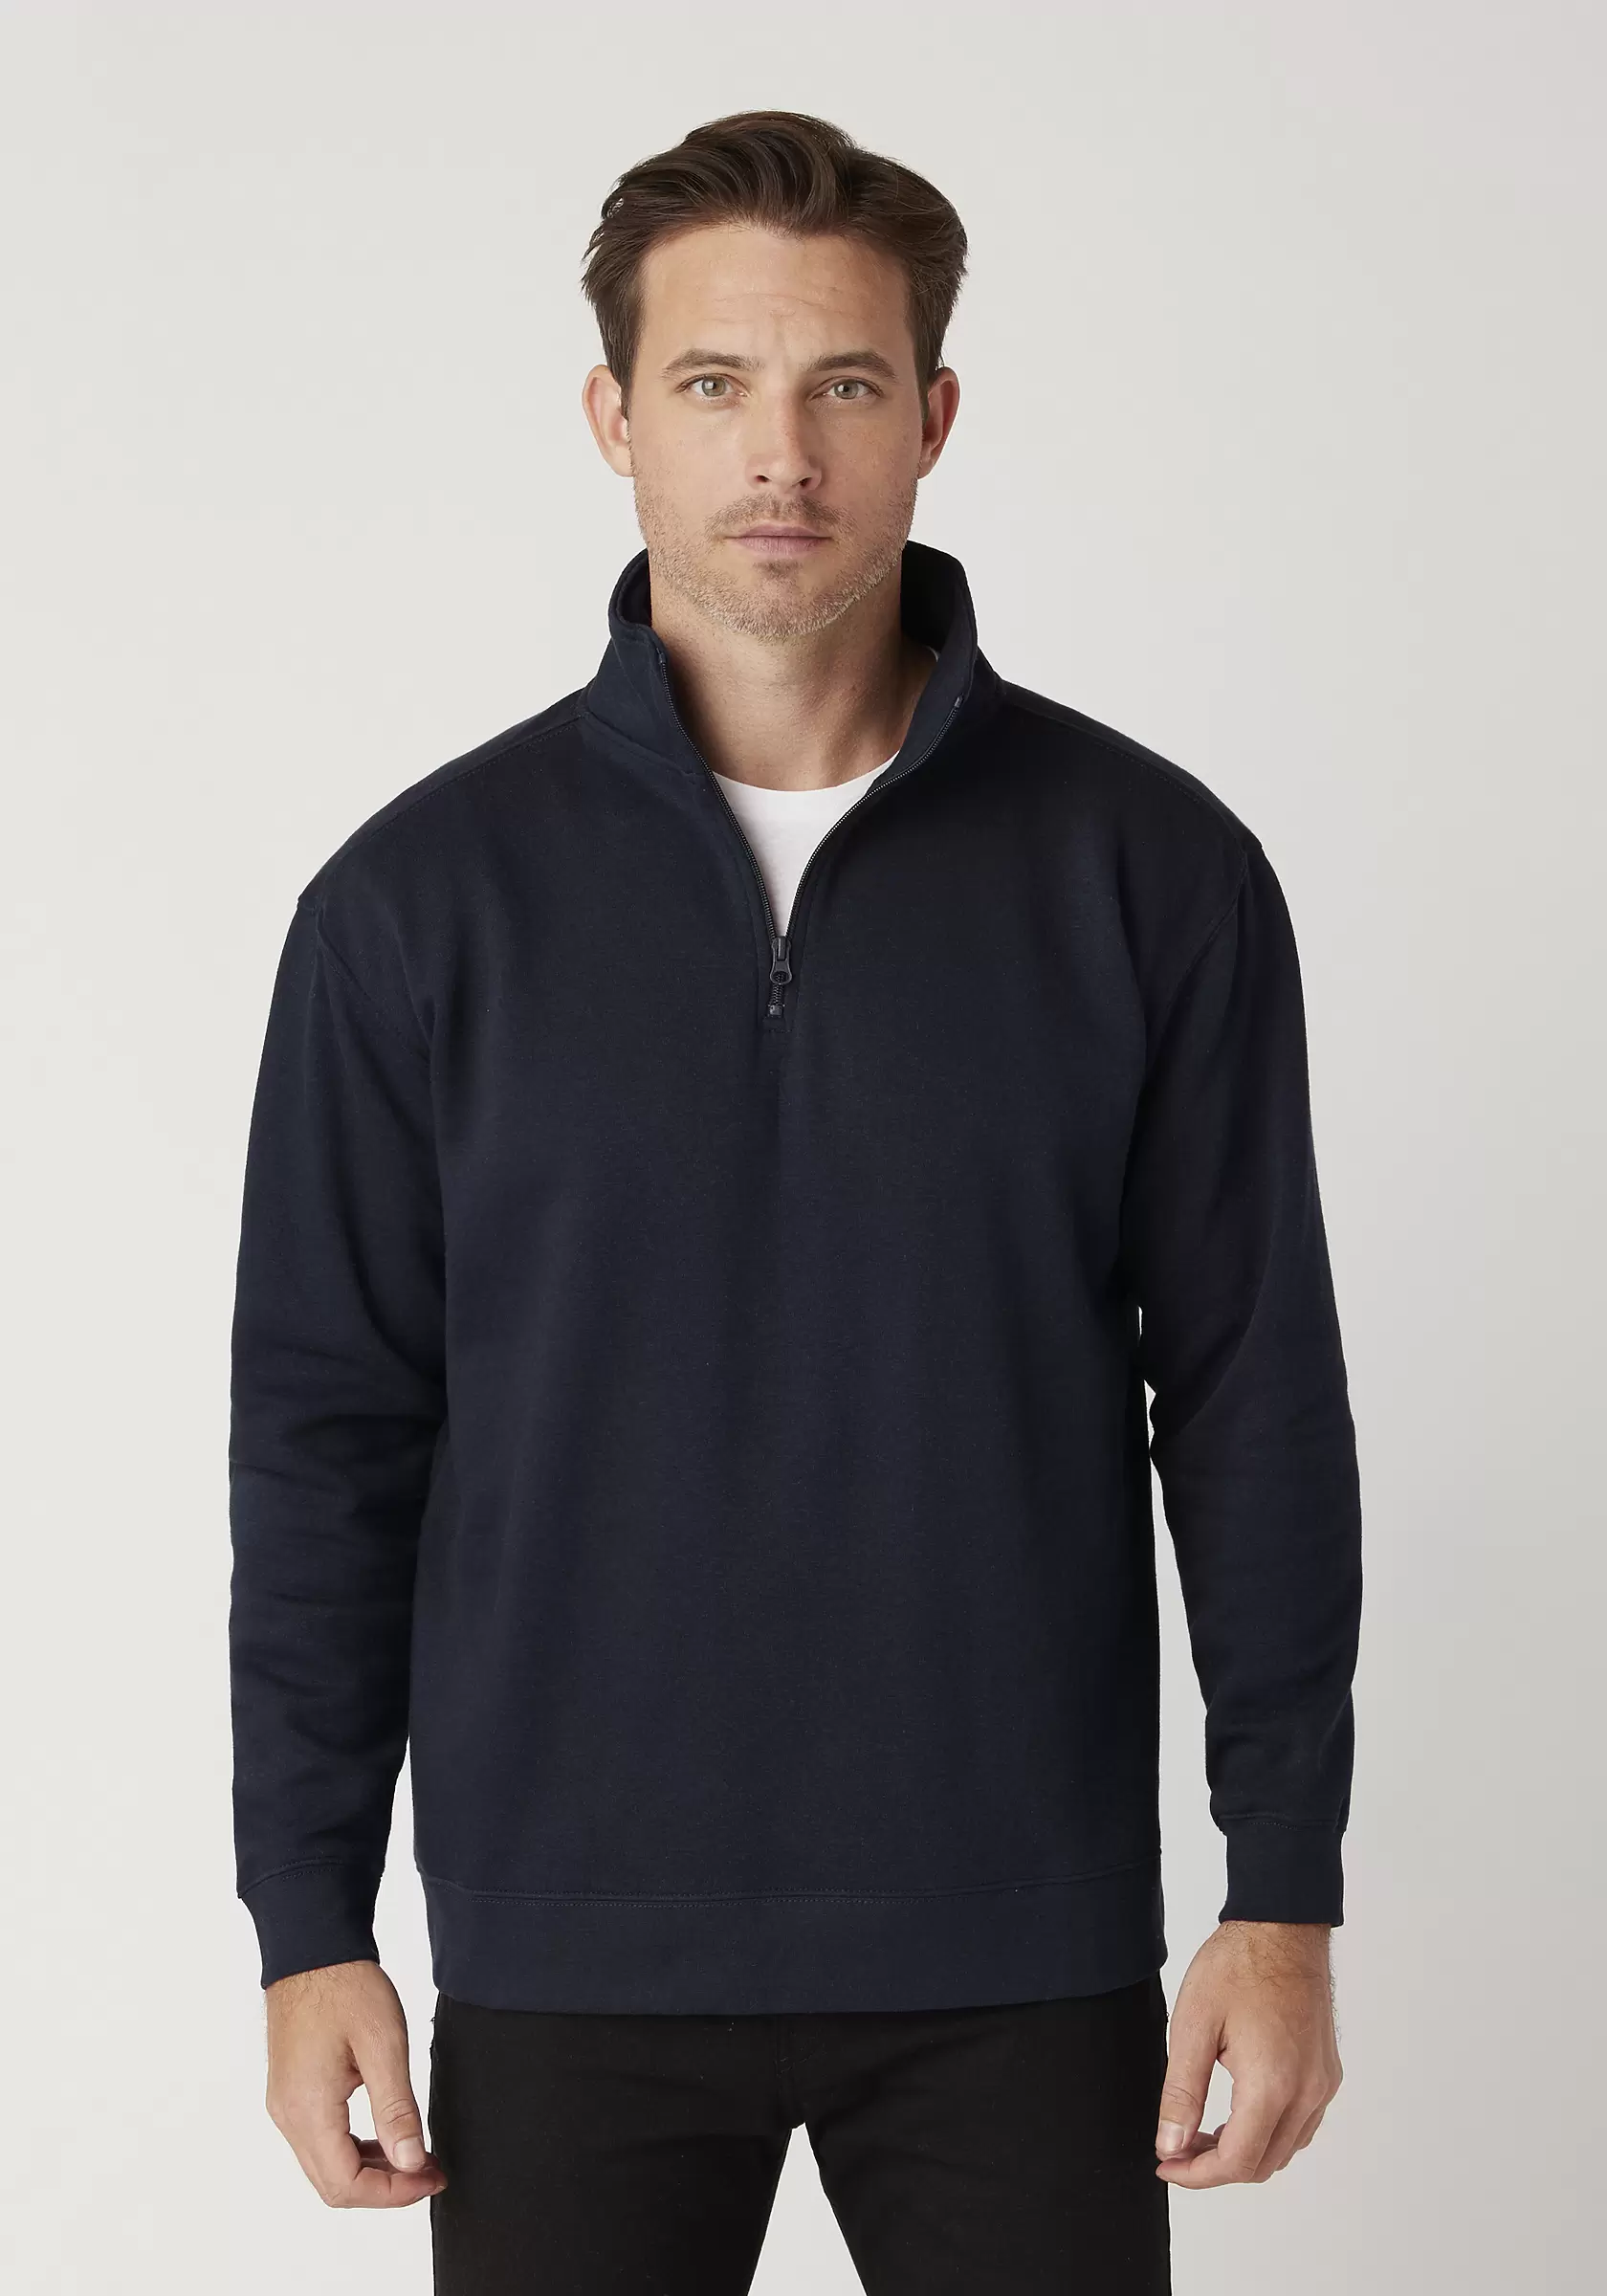 ST253 Sport-Tek® 1/4-Zip Sweatshirt Mens & Ladies sizes plus talls